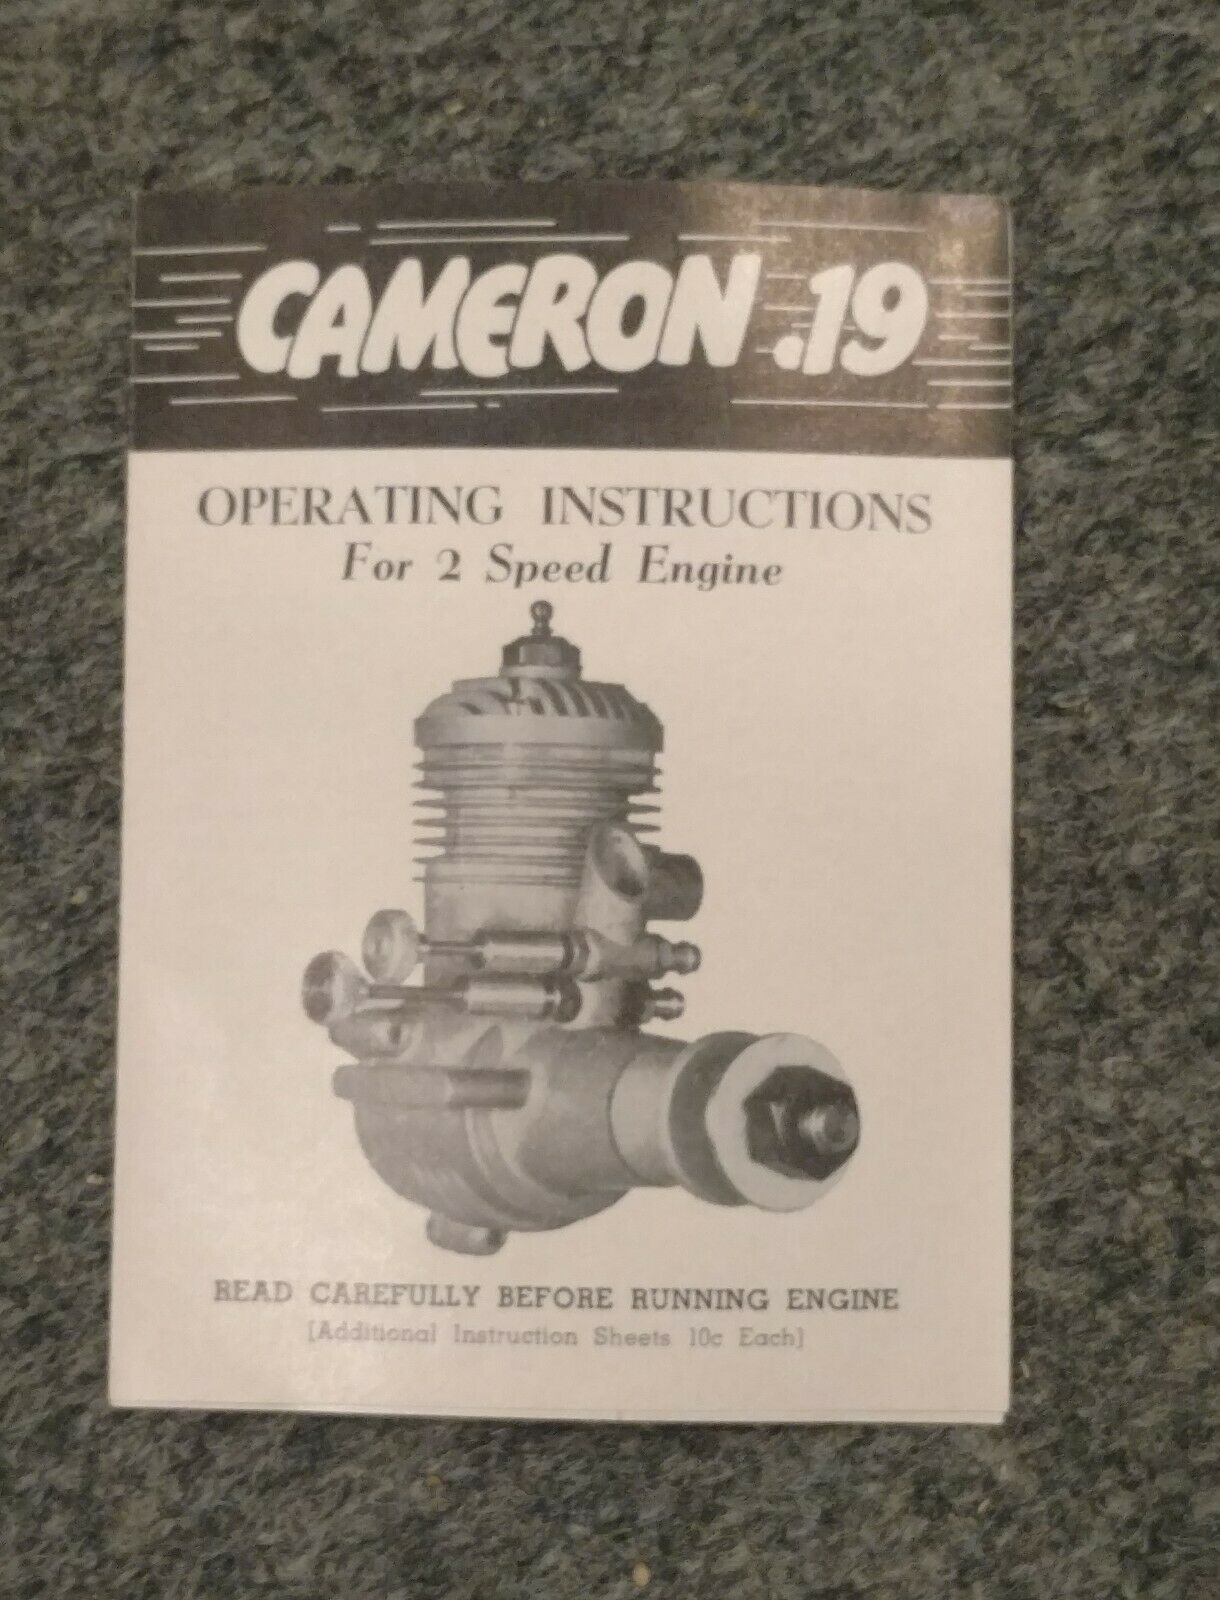 Cameron 19 2 Speed Model Airplane Engine Original Manual Excellent Condition